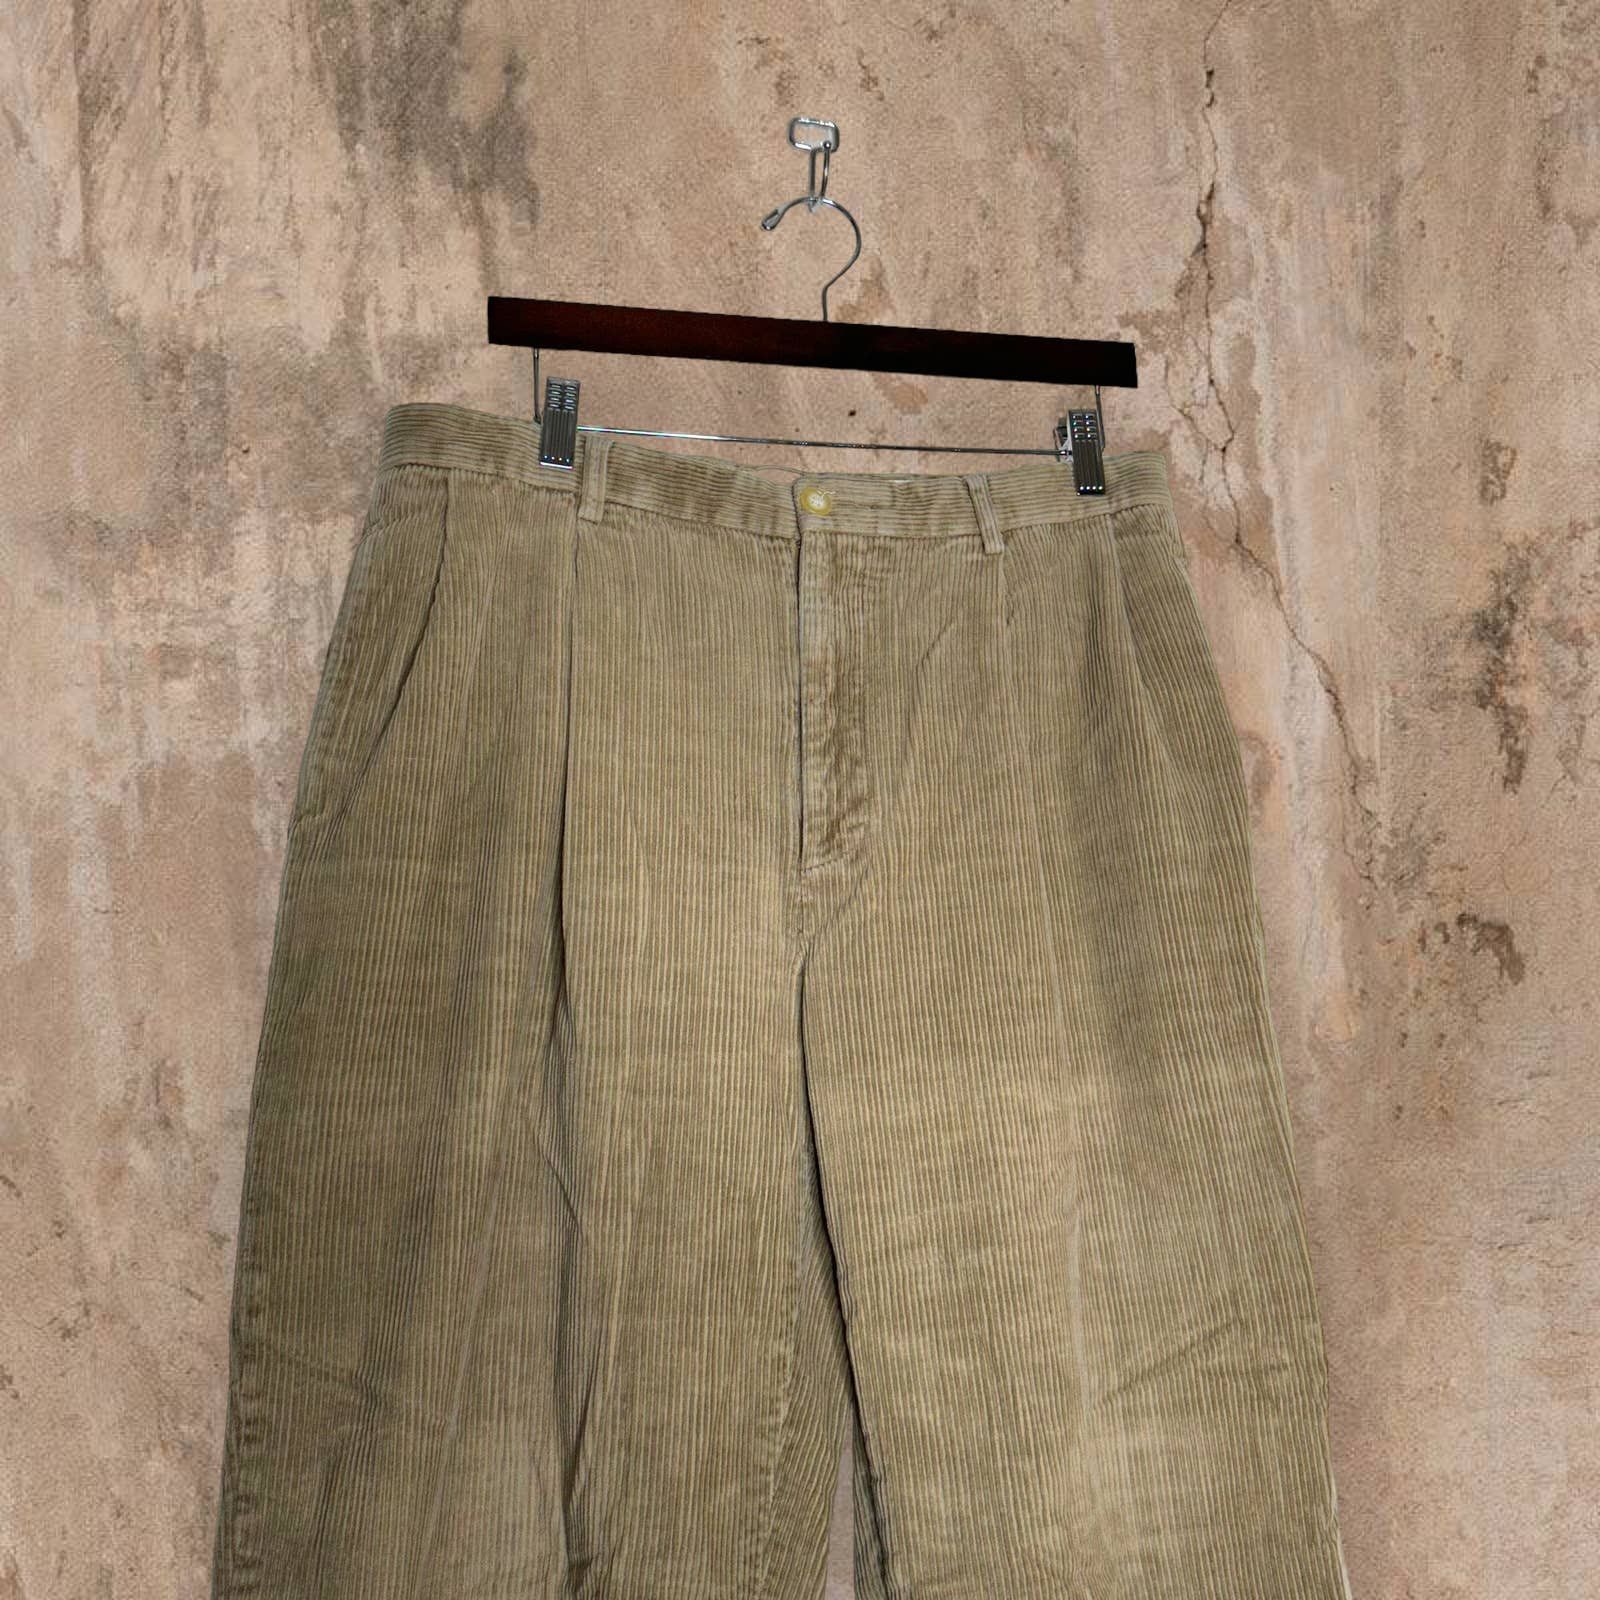 Vintage Vintage Nautica Corduroy Pants Tan Pleated Baggy Fit Y2K Size US 34 / EU 50 - 4 Thumbnail